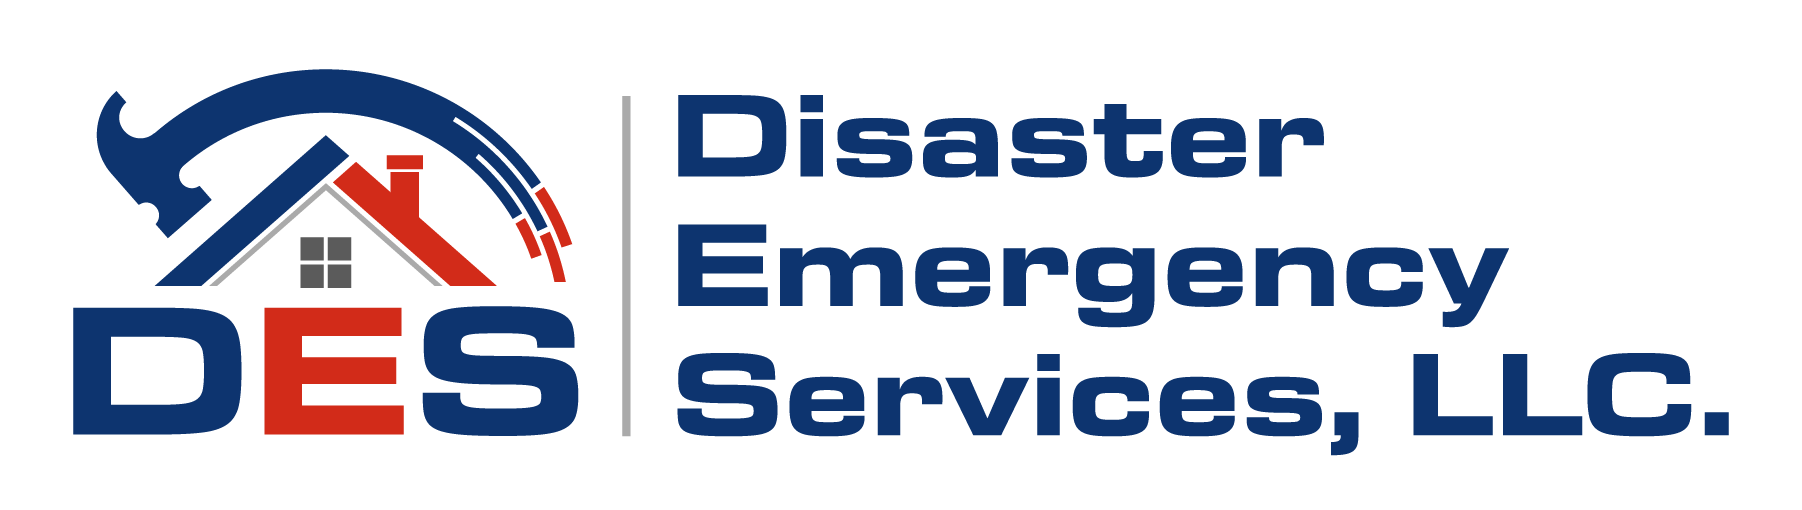 Disaster Emergency Services, LLC (Property Restoration) 3716 Big Bend Industrial Ct Suite G, Maplewood Missouri 63143